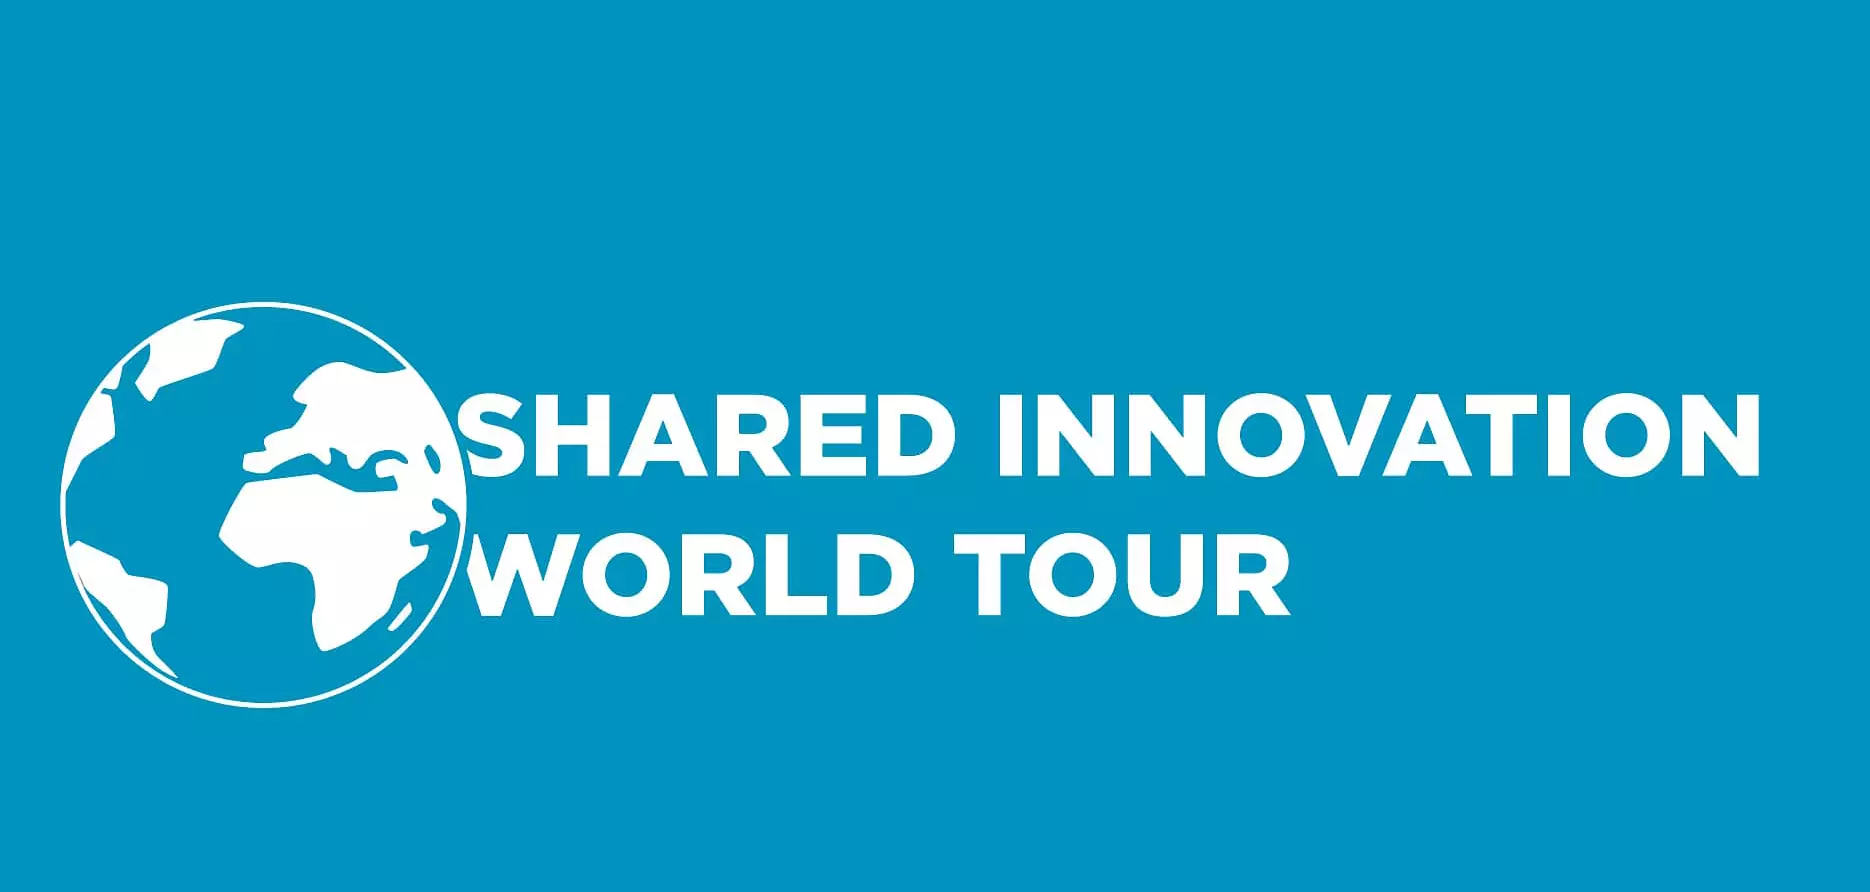 Shared innovation world tour